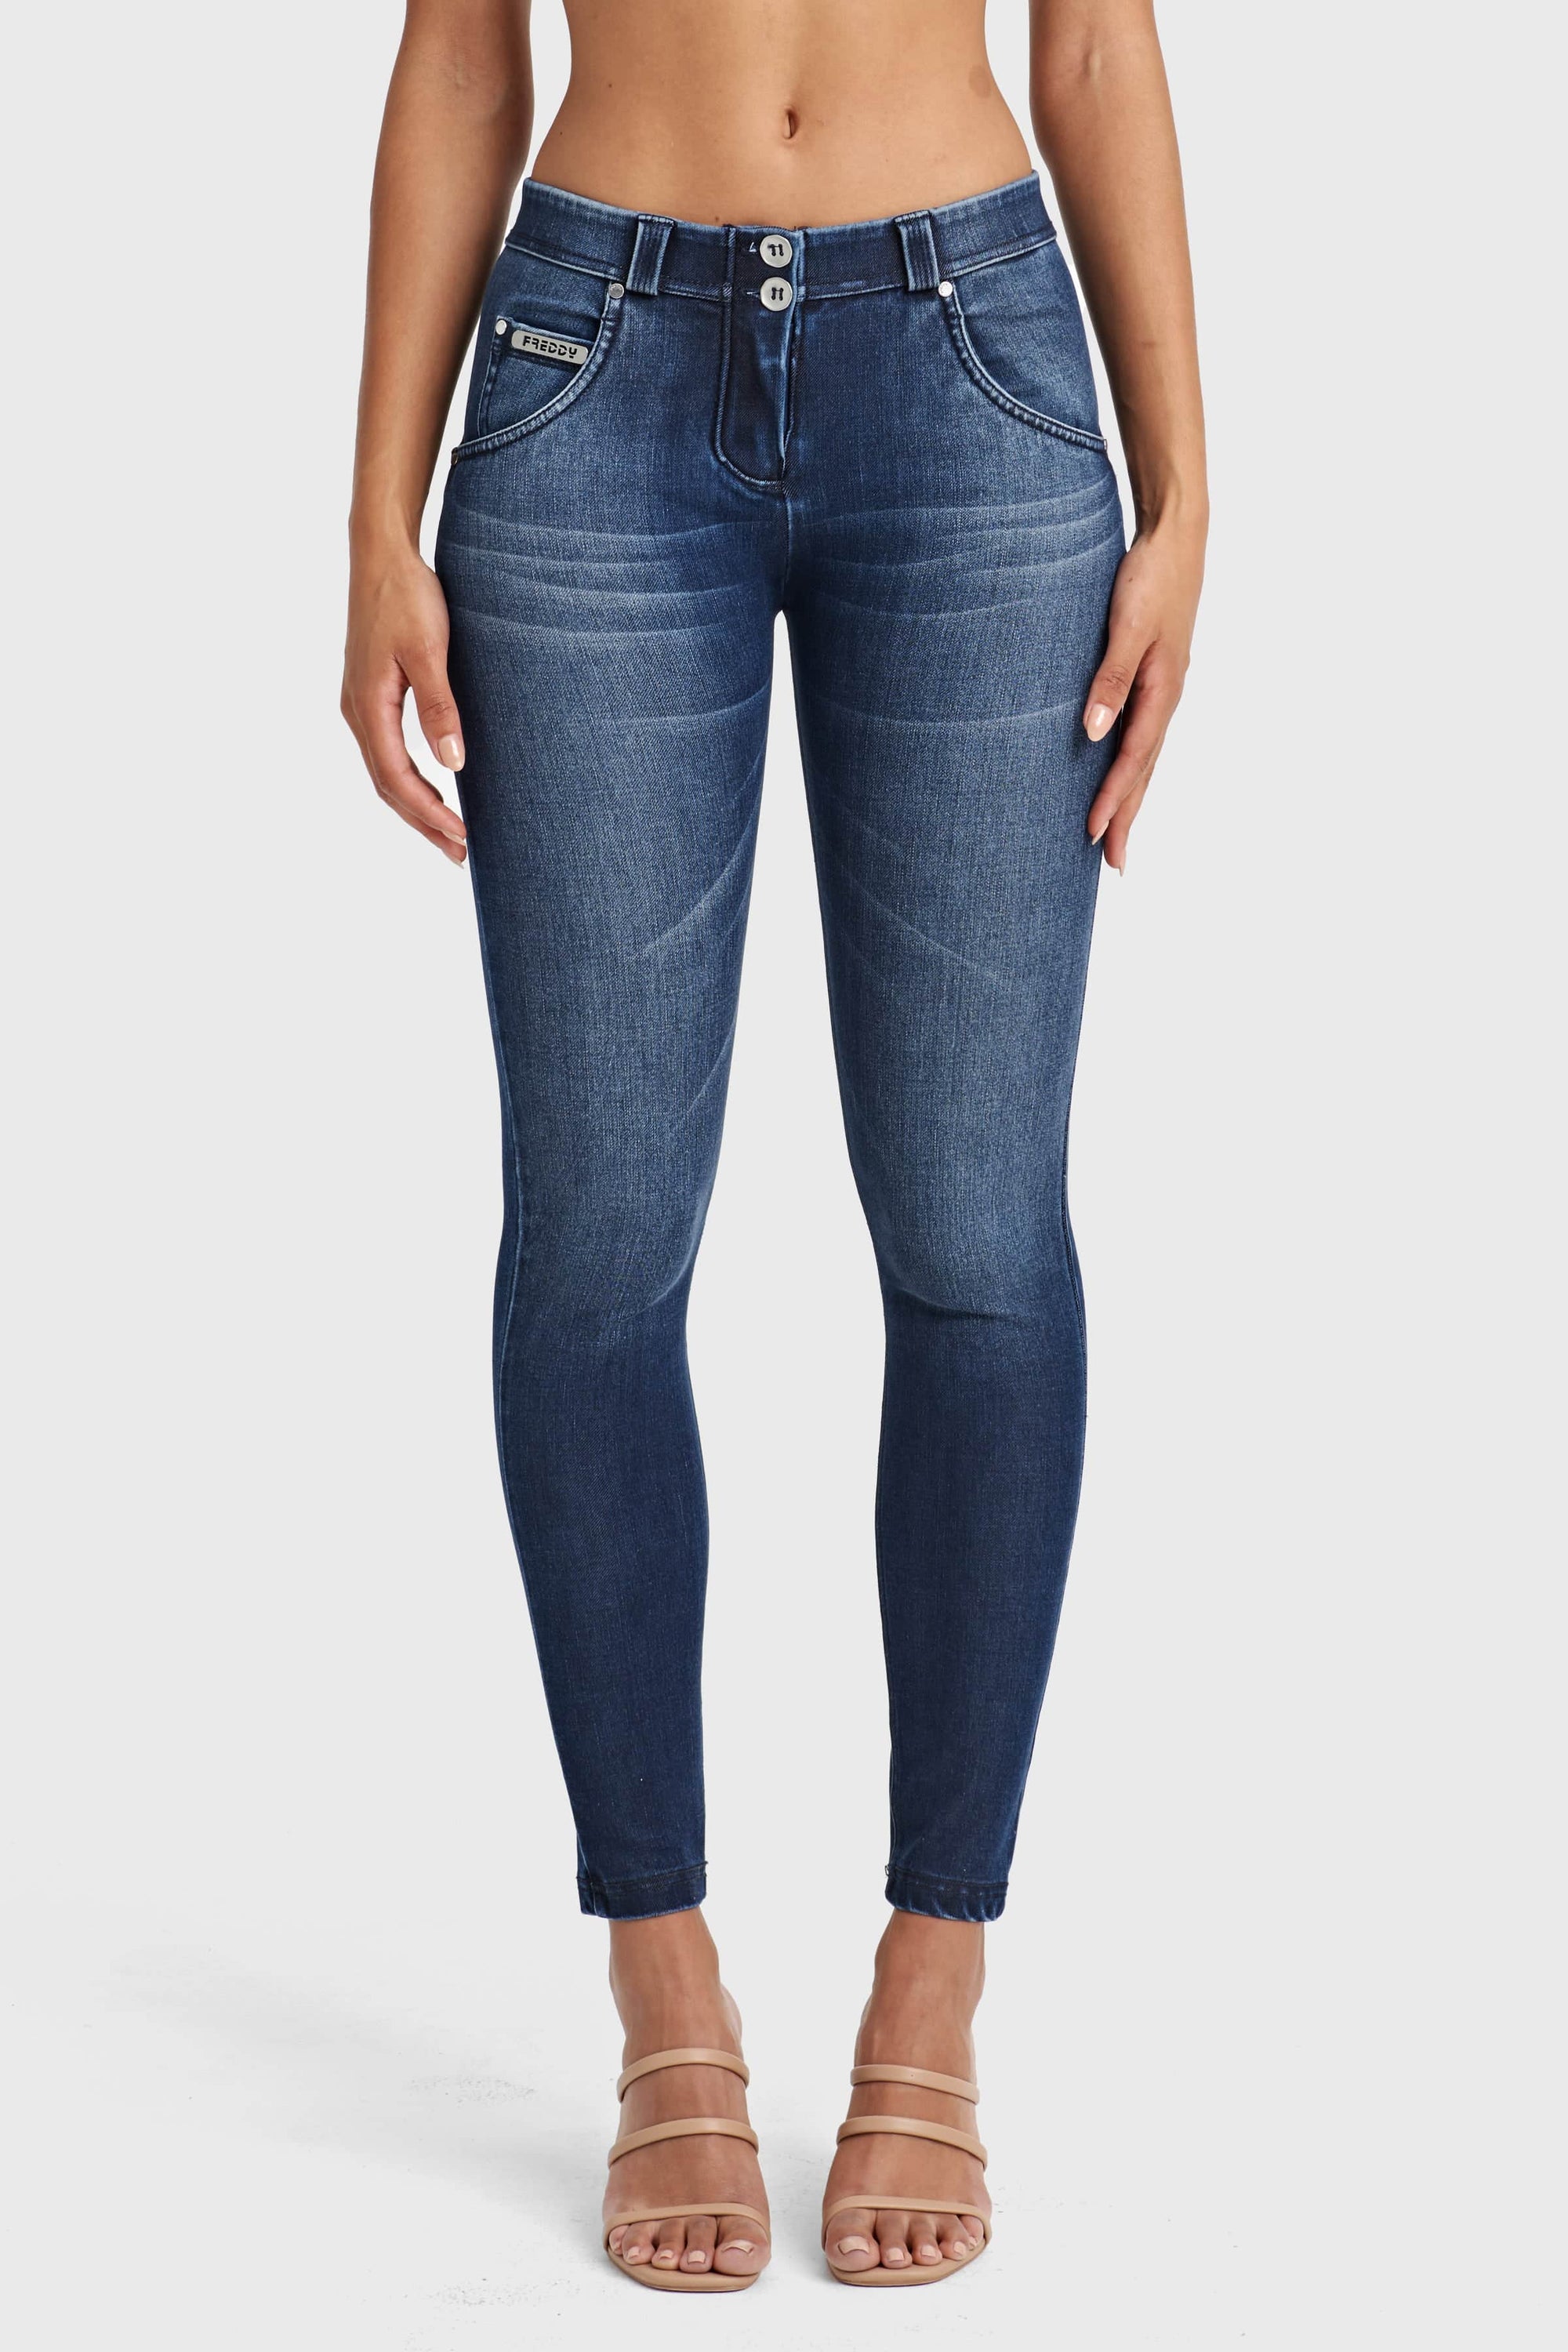 WR.UP® Snug Jeans - Mid Rise - Full Length - Dark Blue + Blue Stitching 5